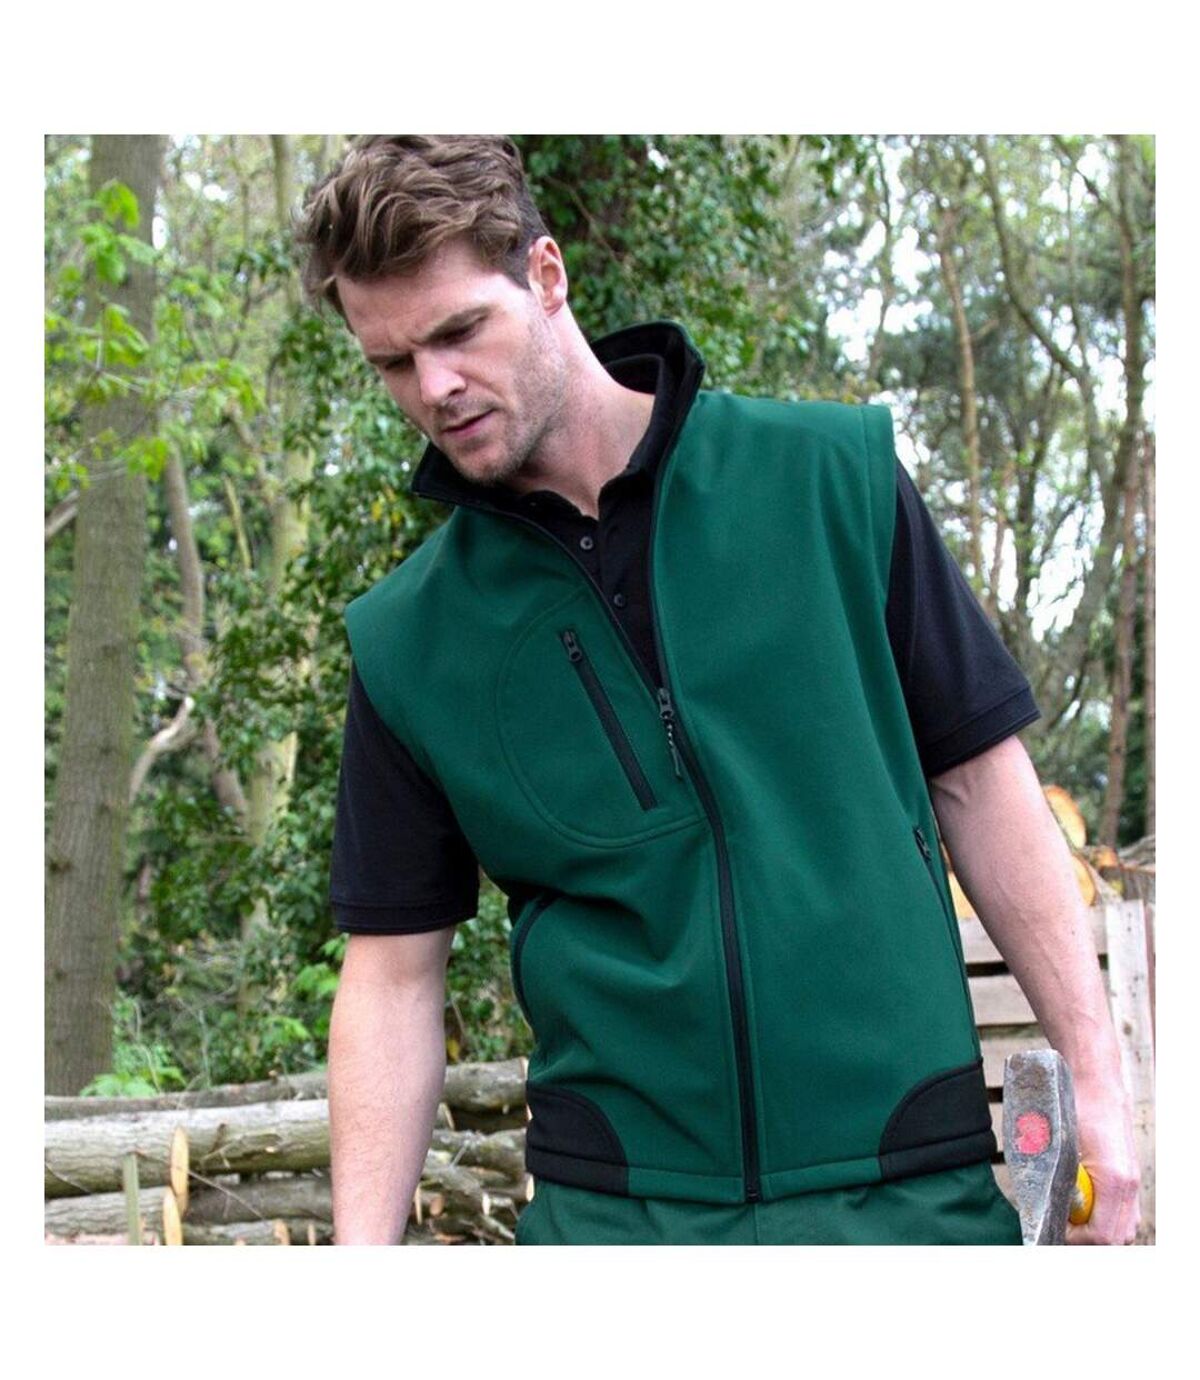 Result Mens Softshell Bodywarmer Breathable Weatherproof Jacket (Bottle Green/Black)